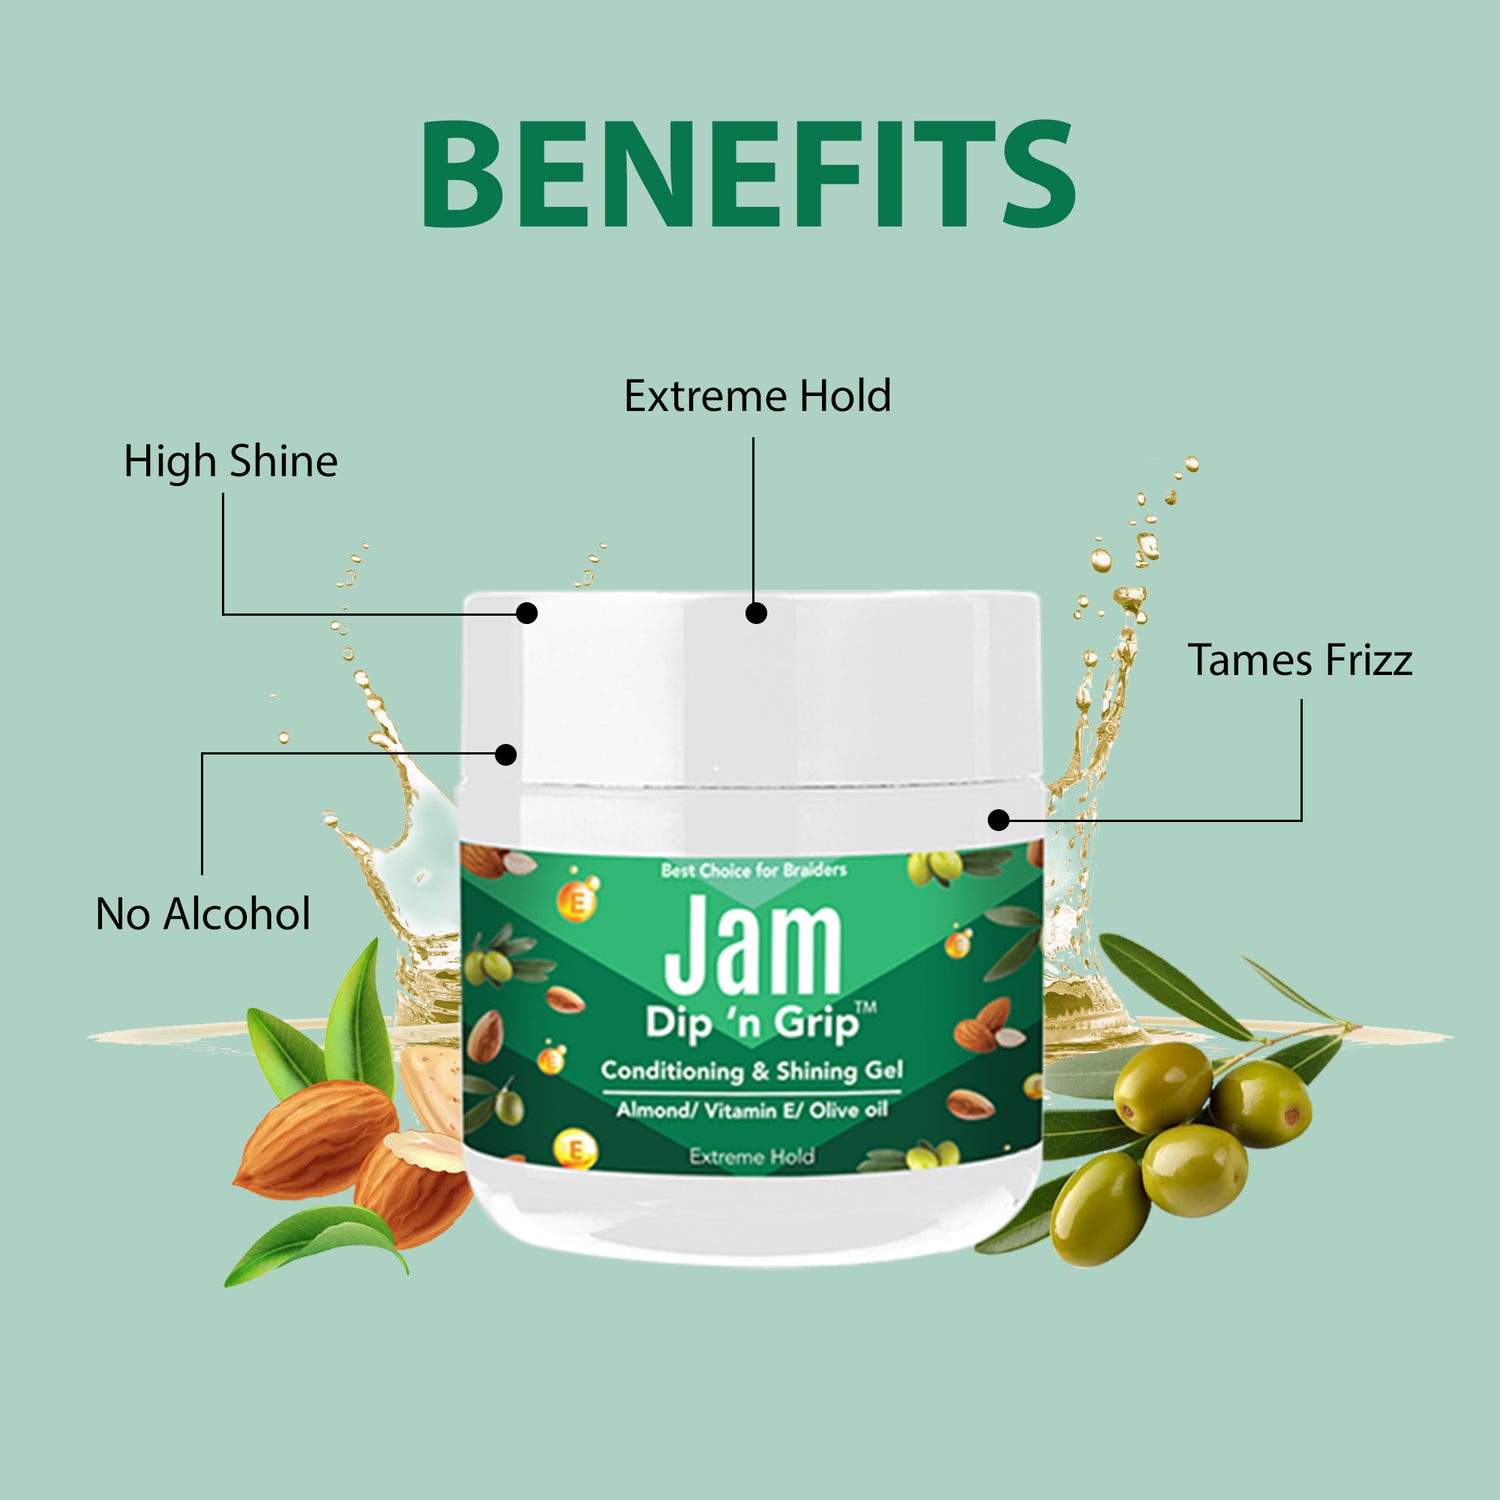 Jam Dip N Grip Almond/Vitamin E/Olive Oil Shining Gel (4oz)